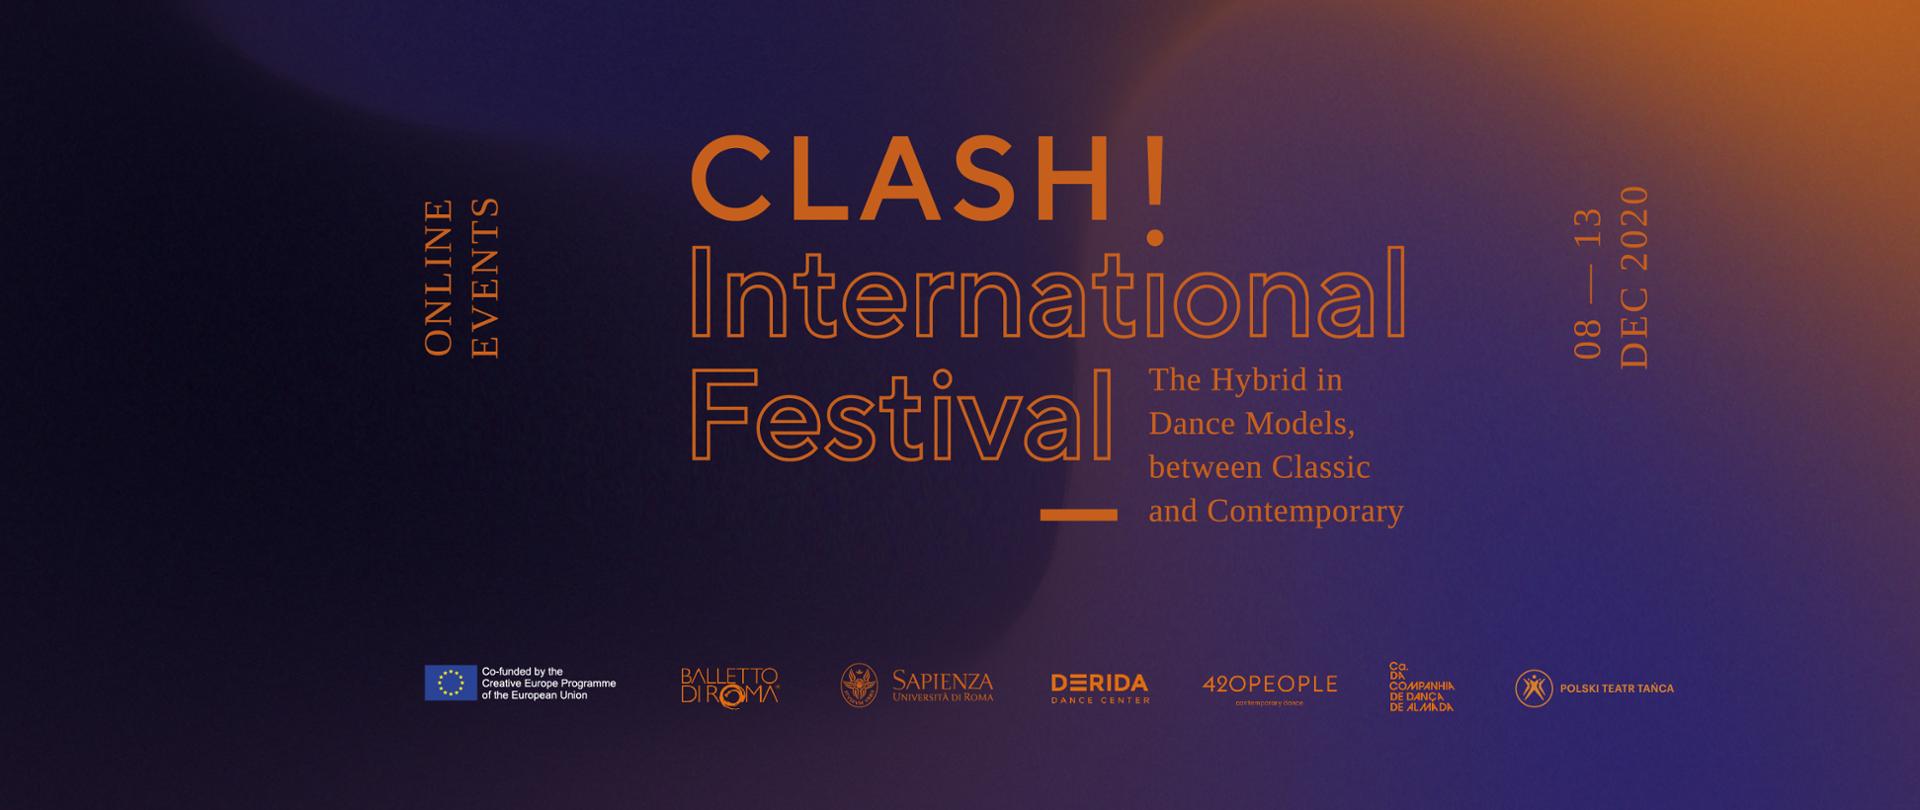 CLASH Internacional Festival